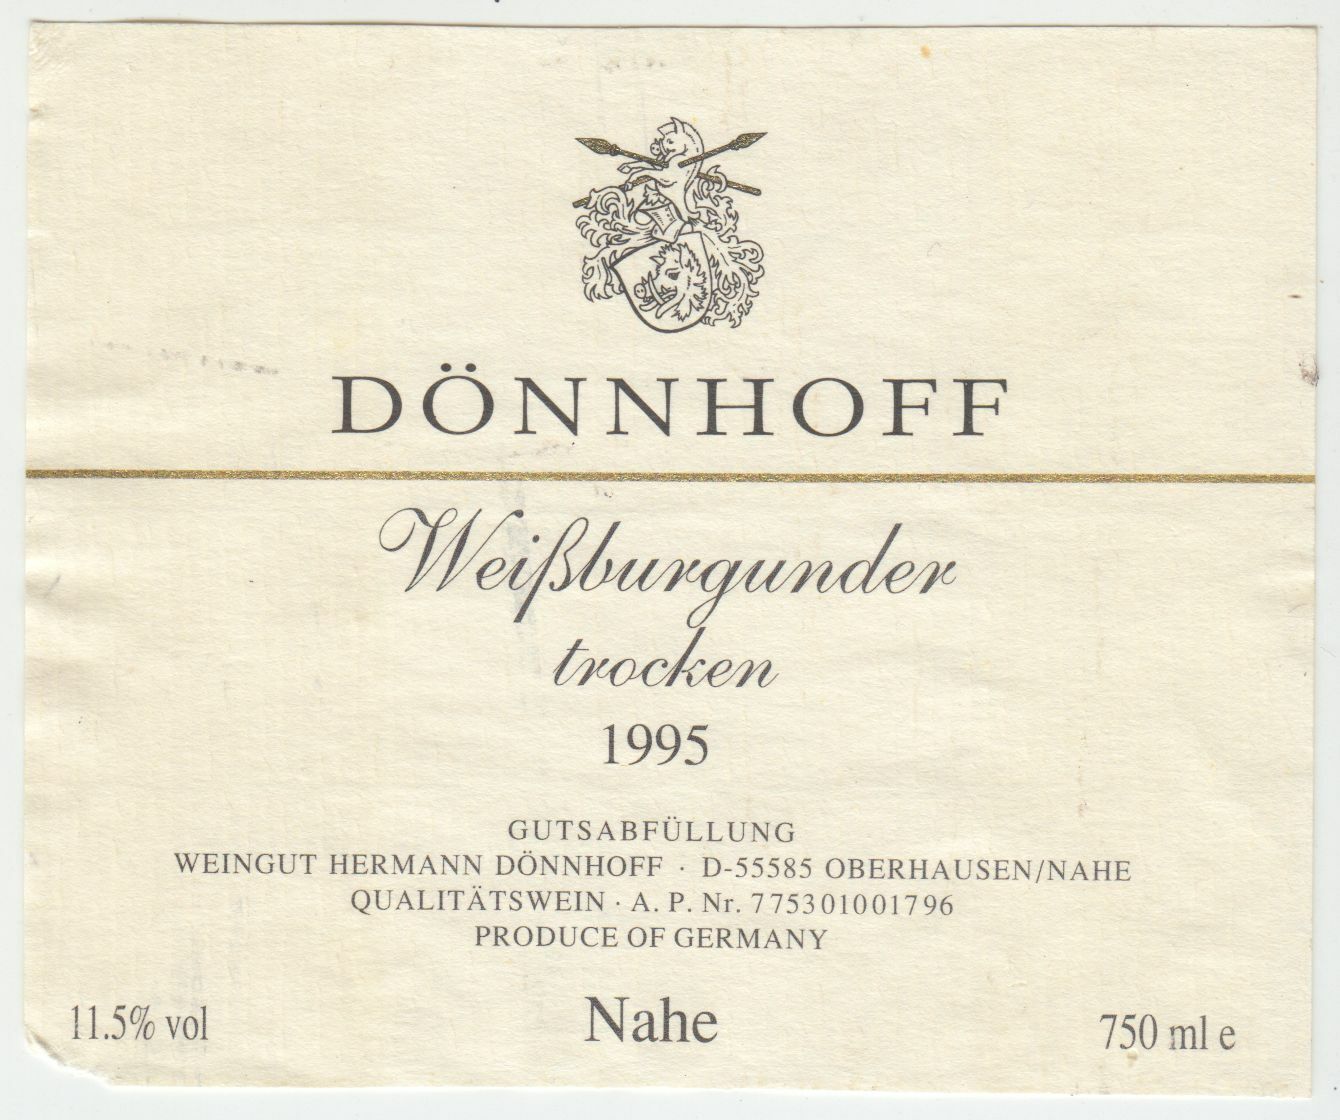 ETIQUETTE DE VIN DONNHOFF WEIBBURGUNDER TROCKEN 1995 402553003200